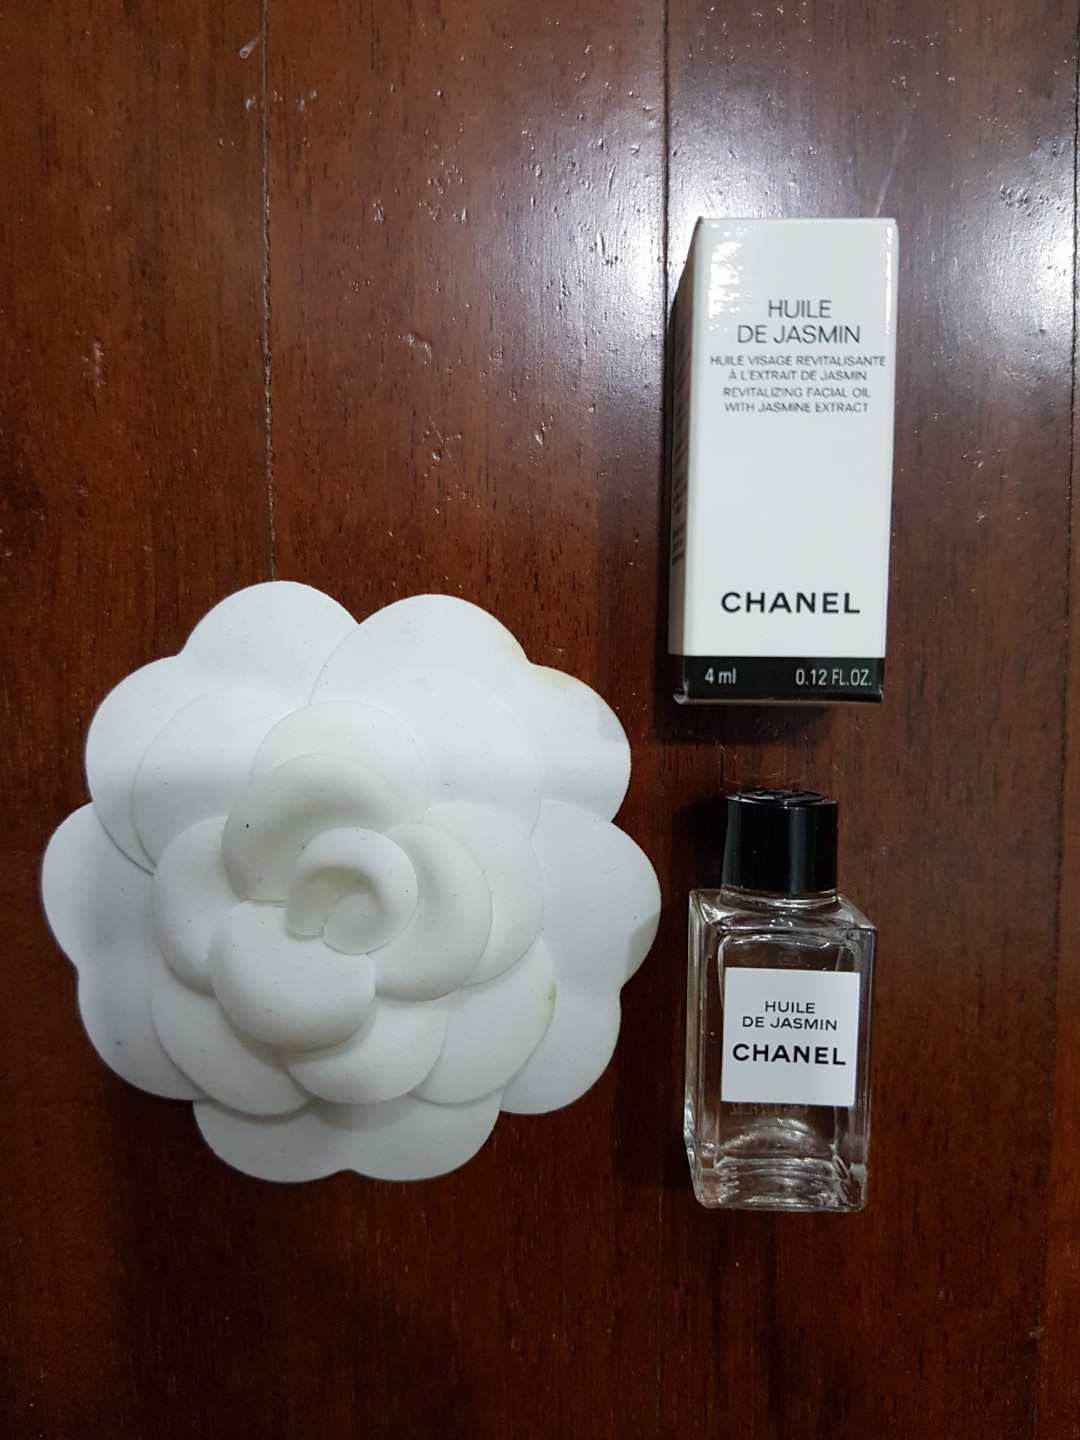 Chanel Huile De Jasmin Revitalizing Facial Oil With Jasmine Extract